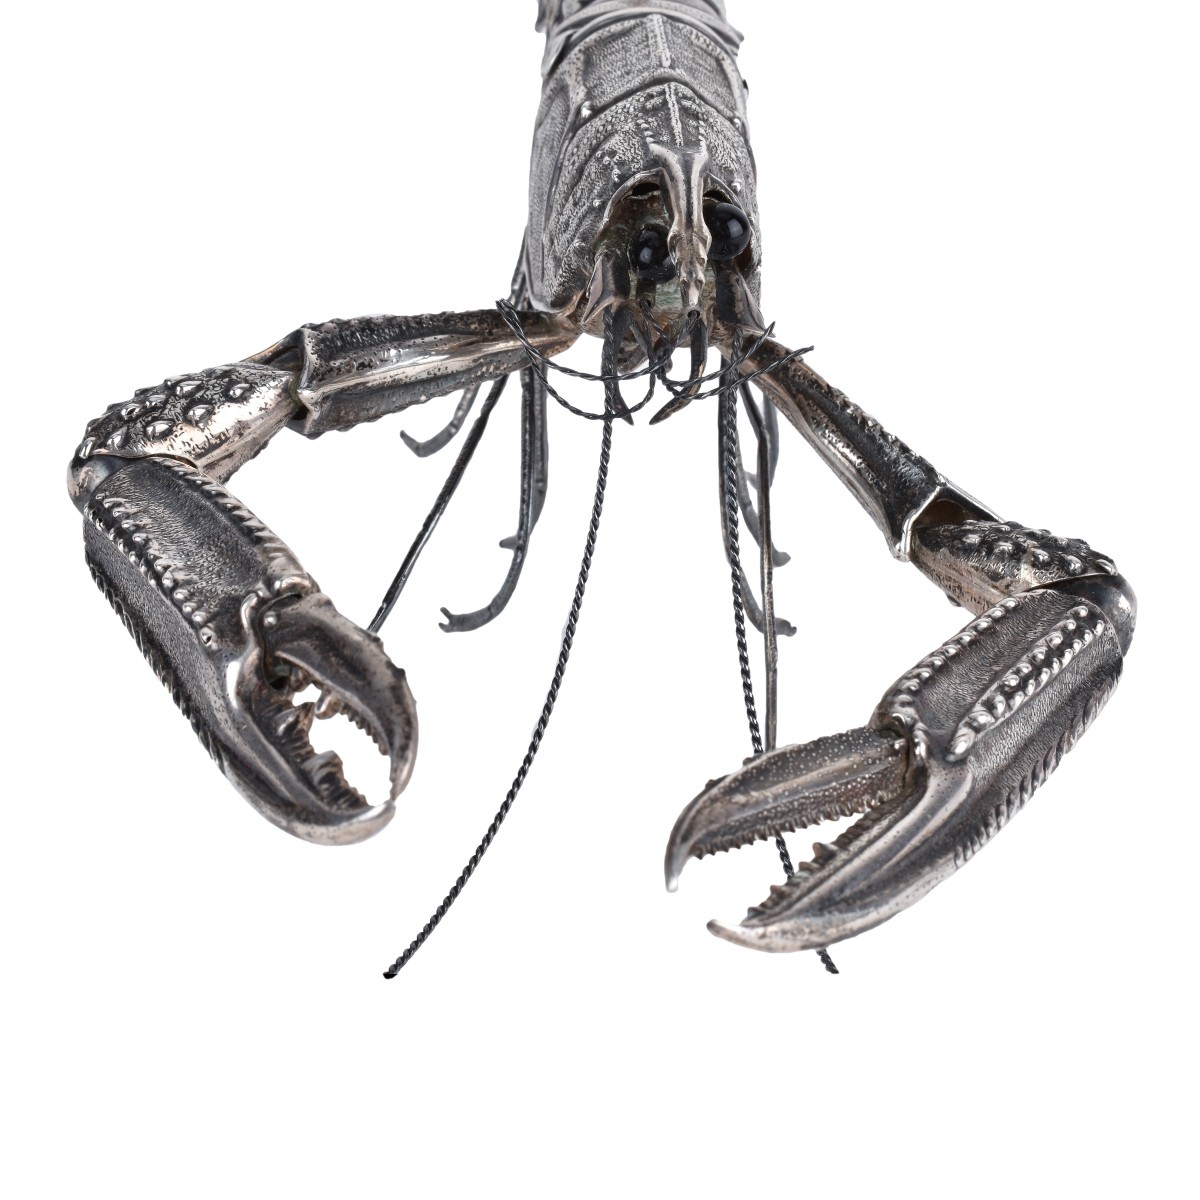 Impressive Spanish Silver Articulated Lobster Figu